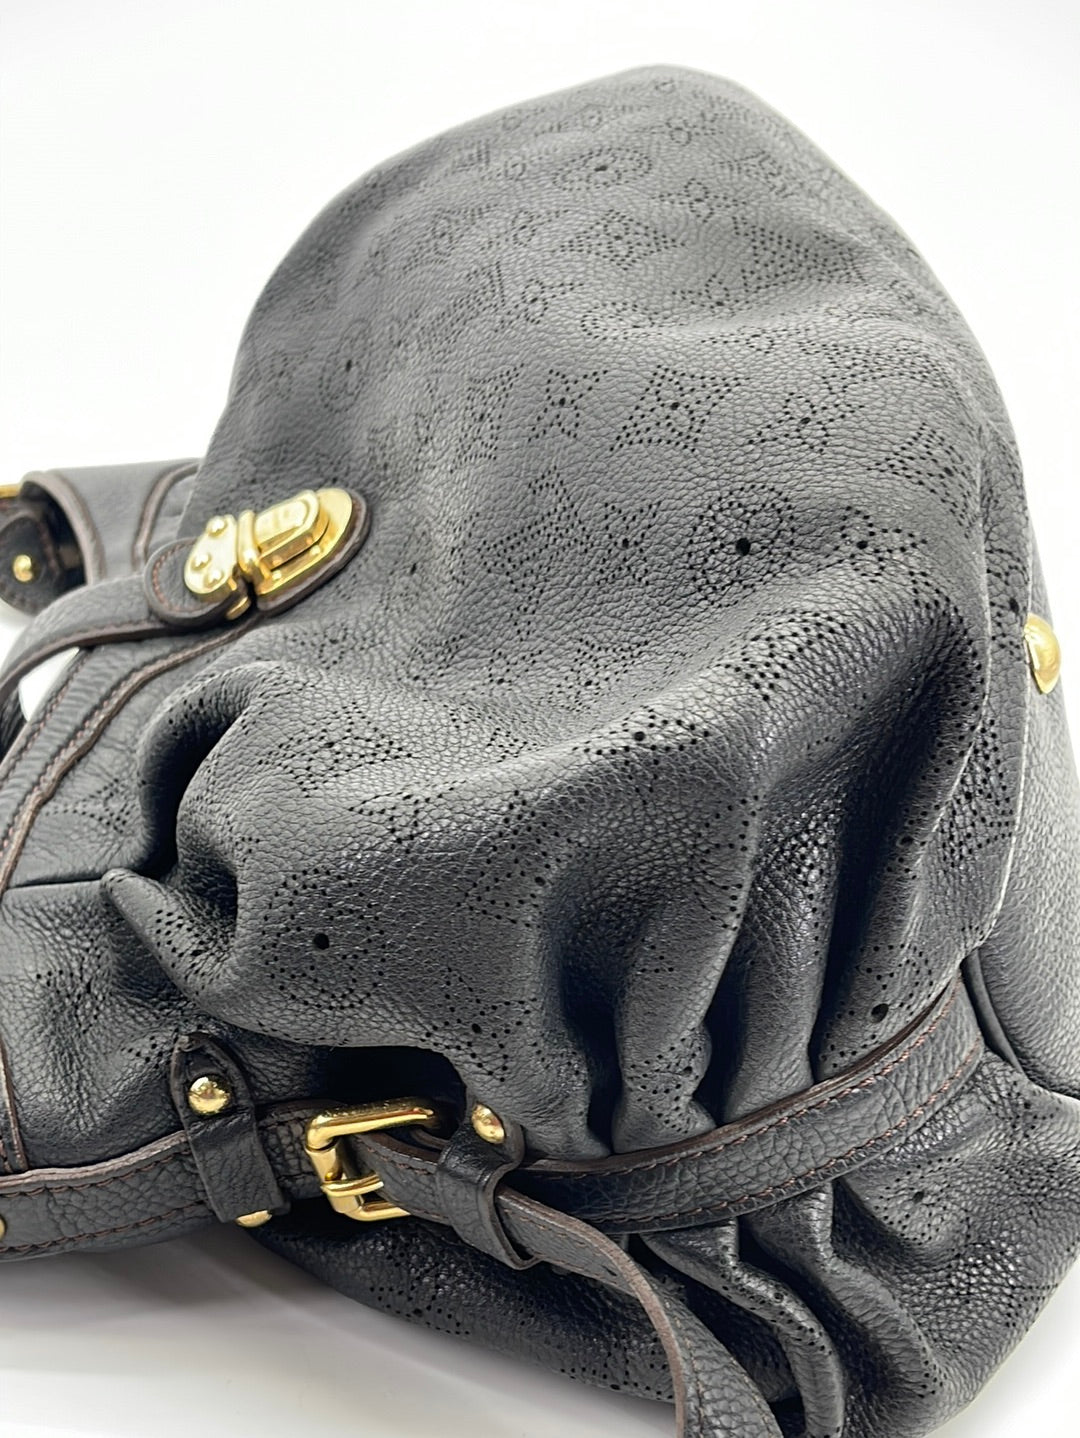 Louis Vuitton, Bags, Louis Vuitton Mahina Leather Bag